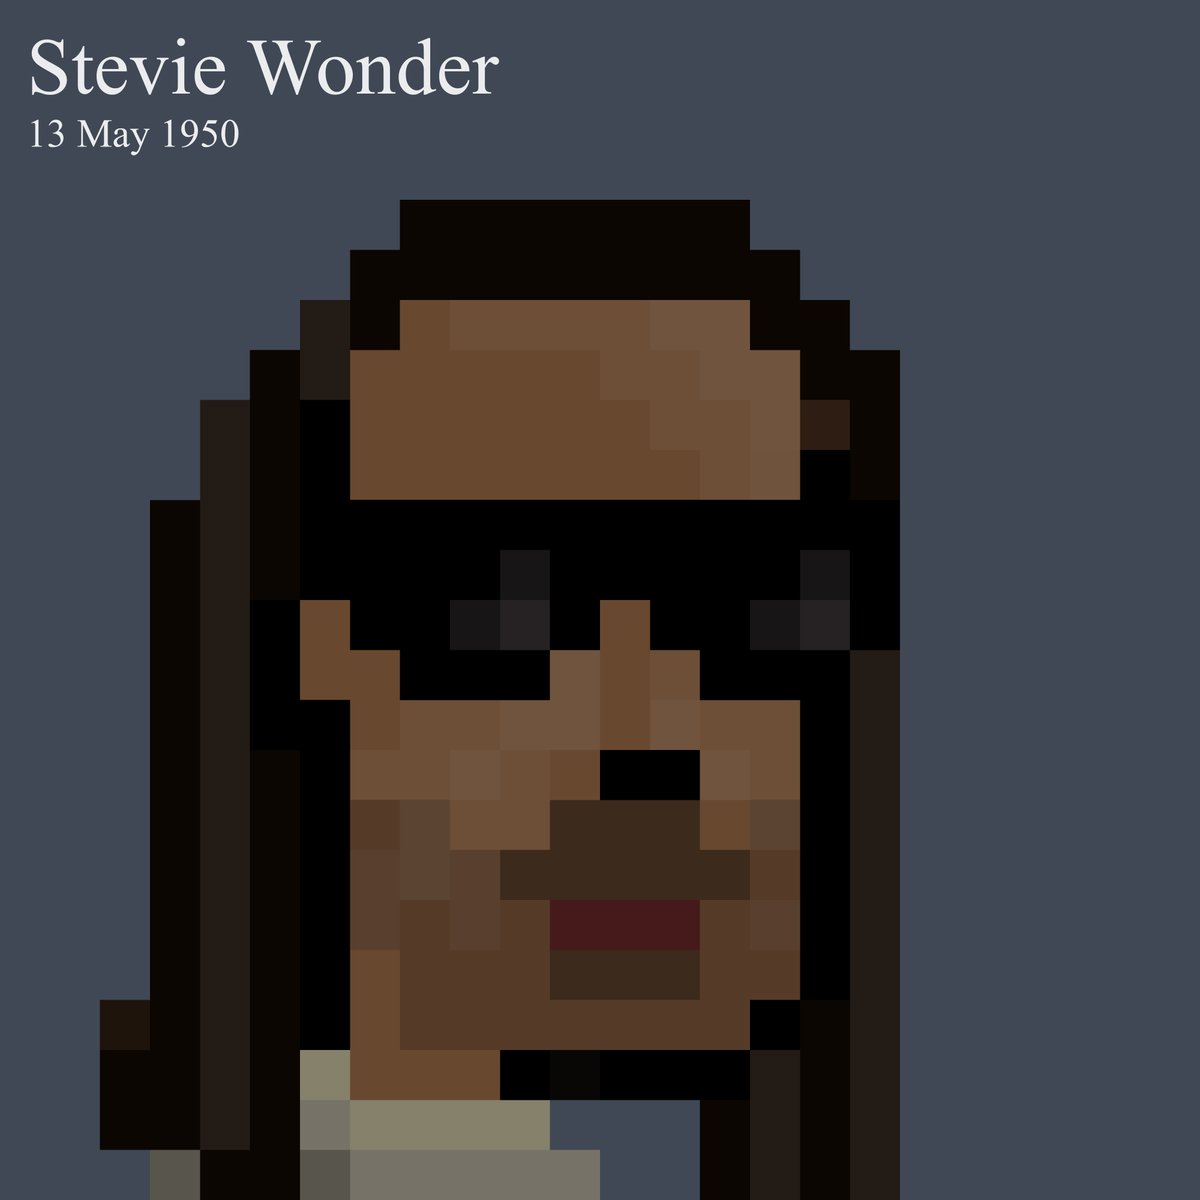 punkpedia.org/Stevie-Wonder

🥳❤️

#StevieWonder #NFTArt #PixelPortrait #MusicLegend #Inspirational #SoulMusic